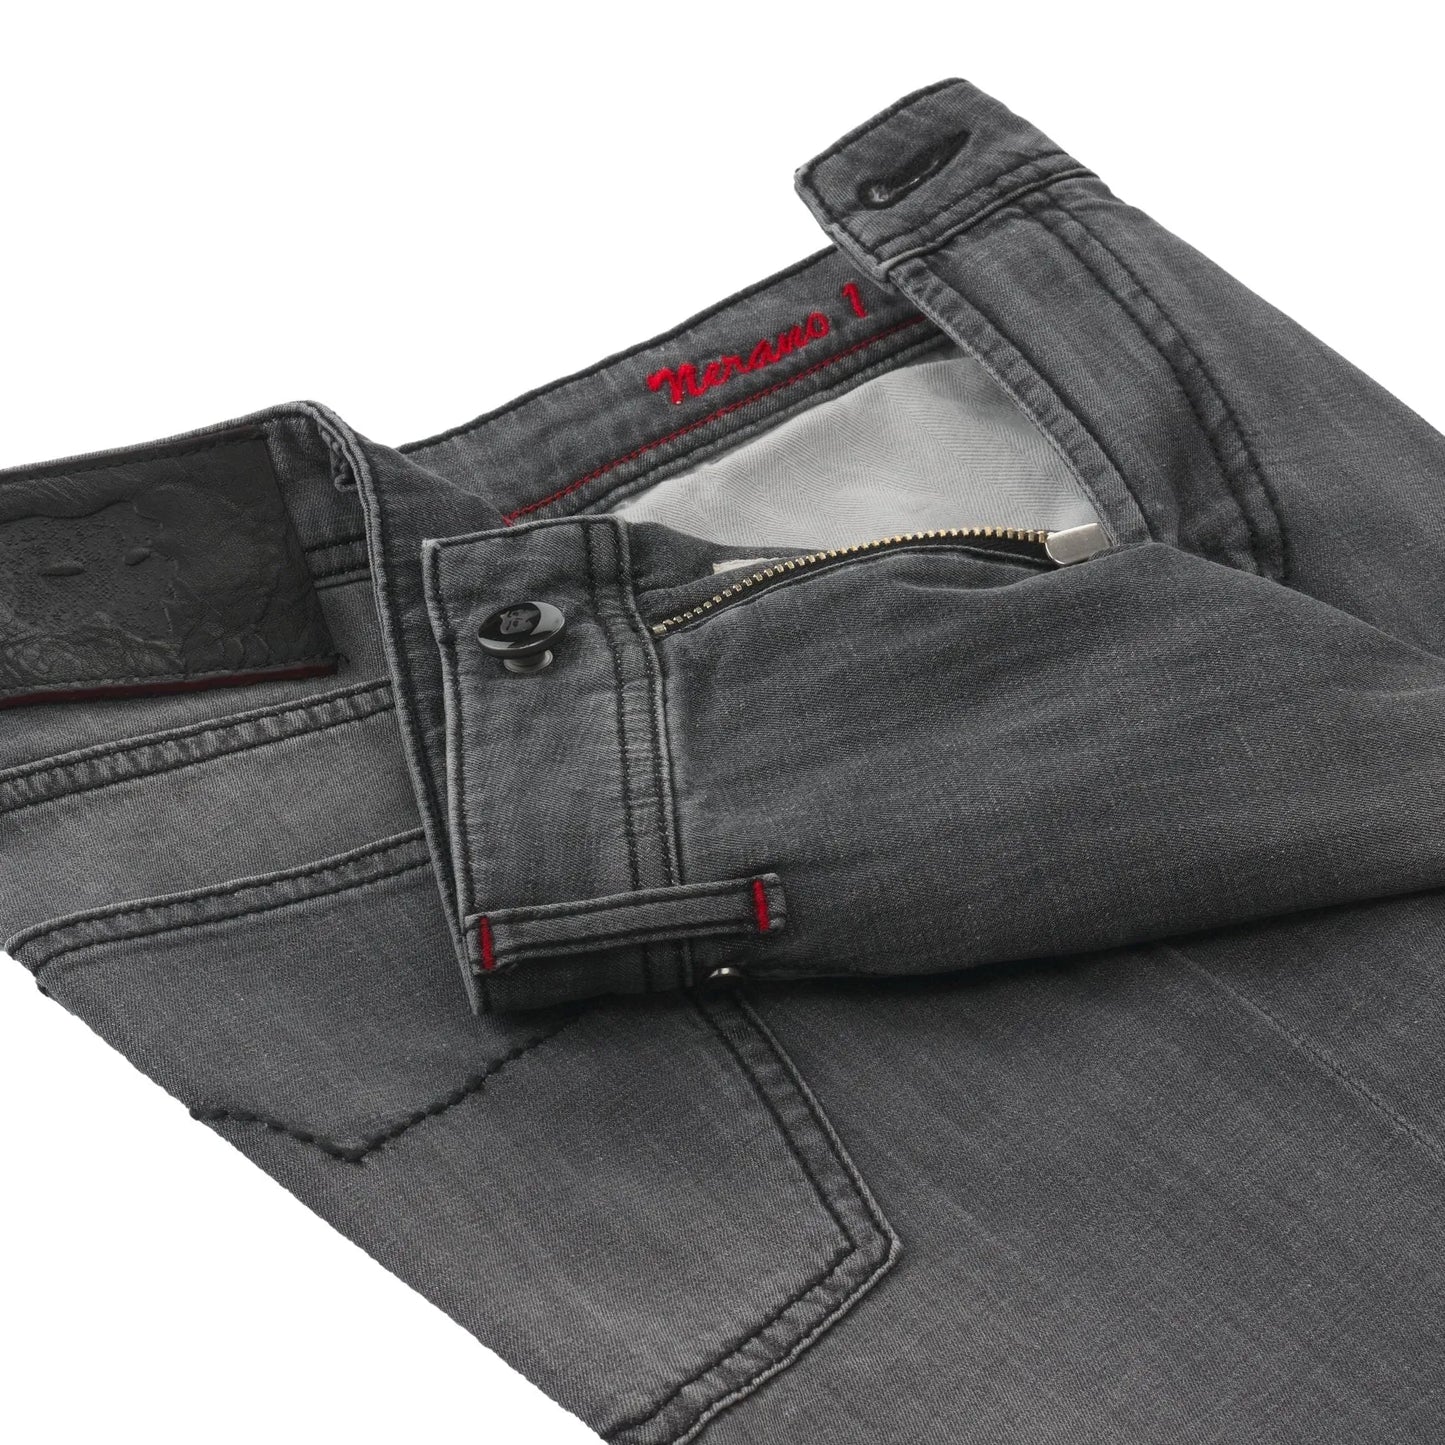 Regular-Fit Stretch-Denim 5 Pockets Grey Jeans